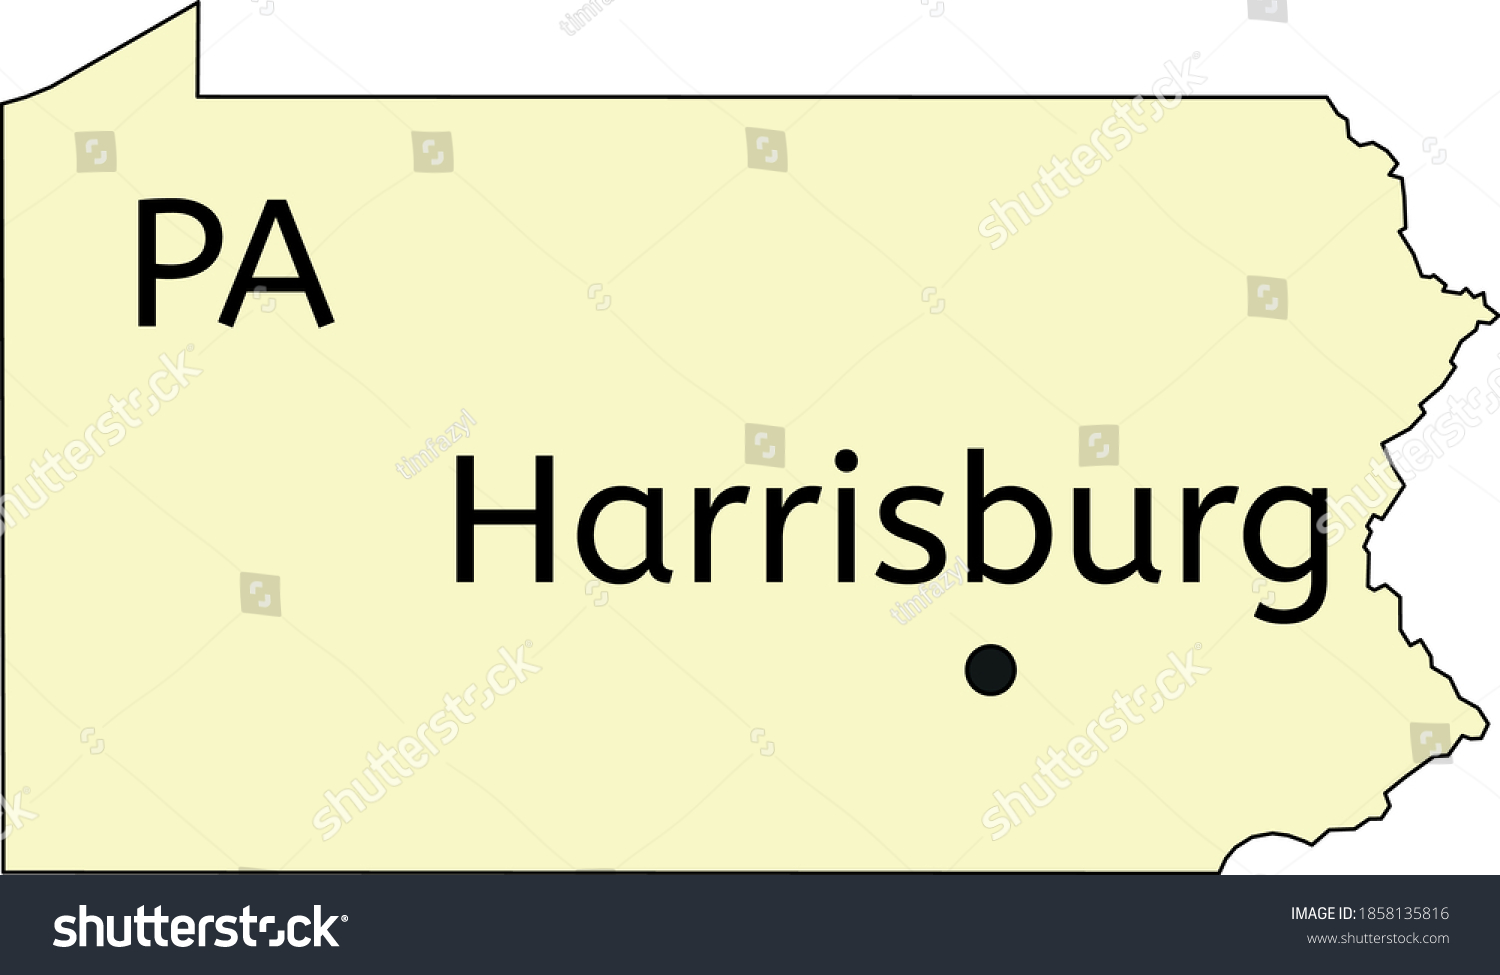 Harrisburg city location on Pennsylvania map #1858135816